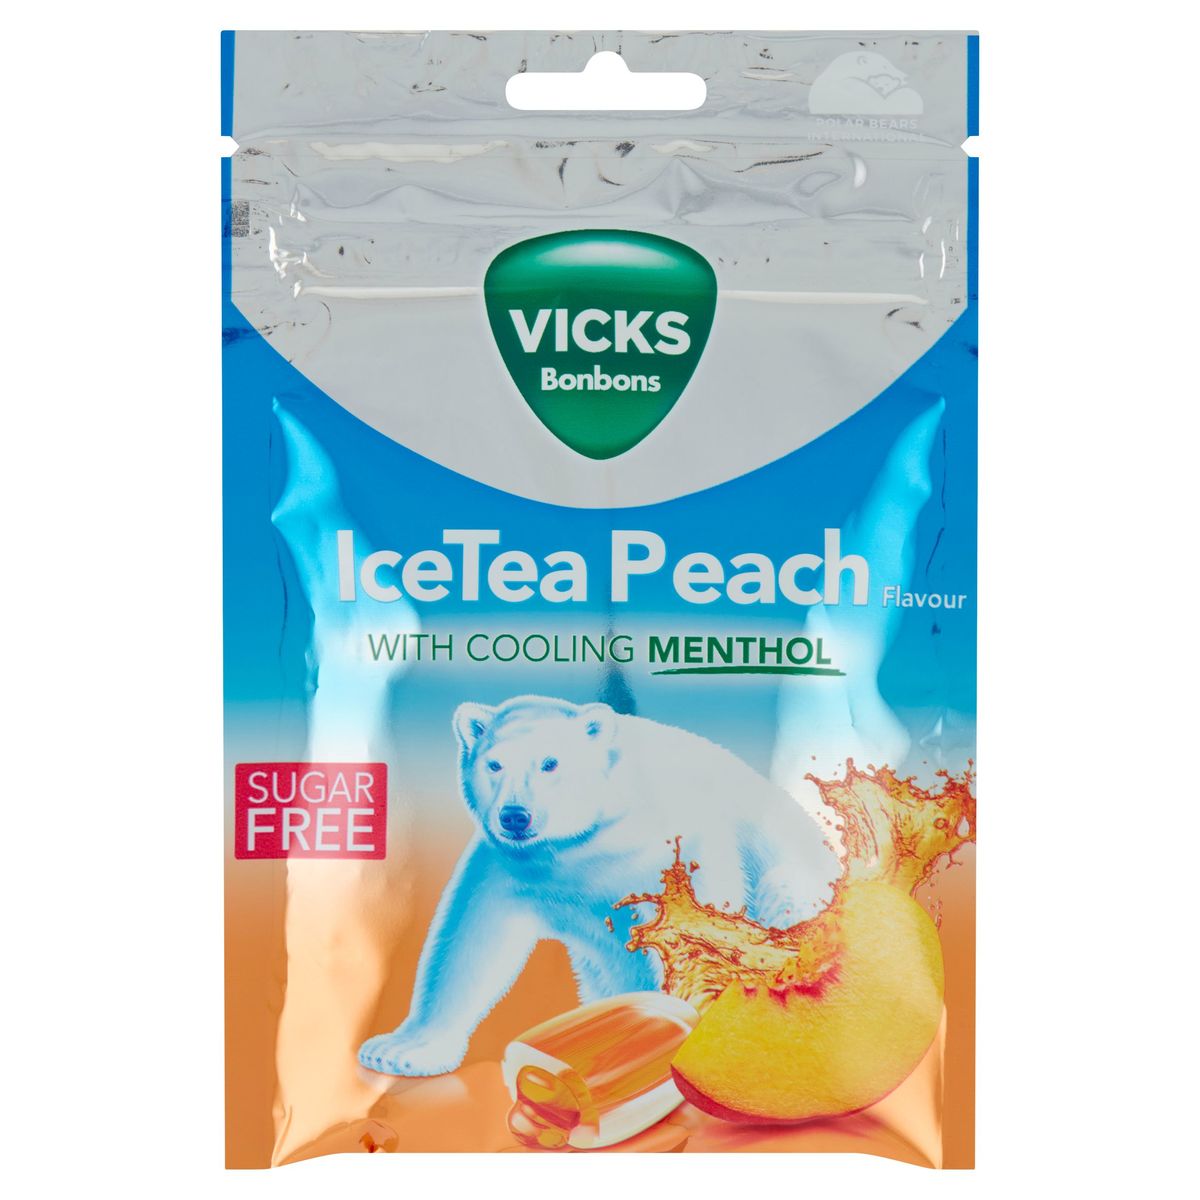 Vicks Bonbons IceTea Peach Flavour with Cooling Menthol 72 g